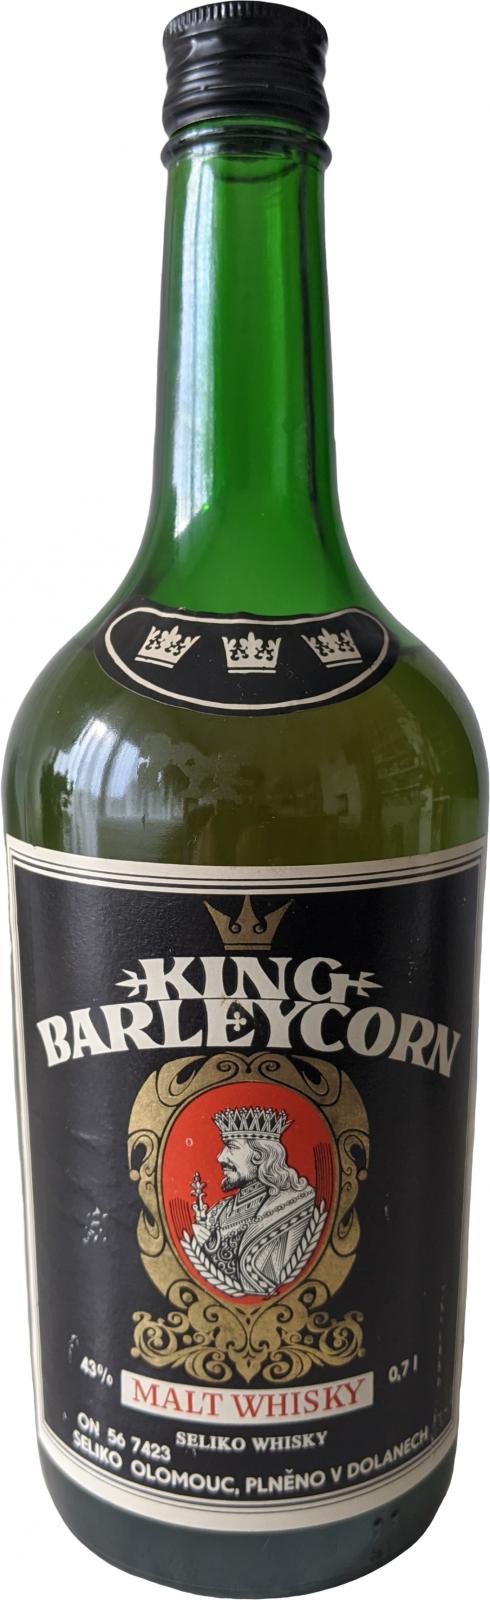 King Barleycorn Malt Whisky 43% 700ml